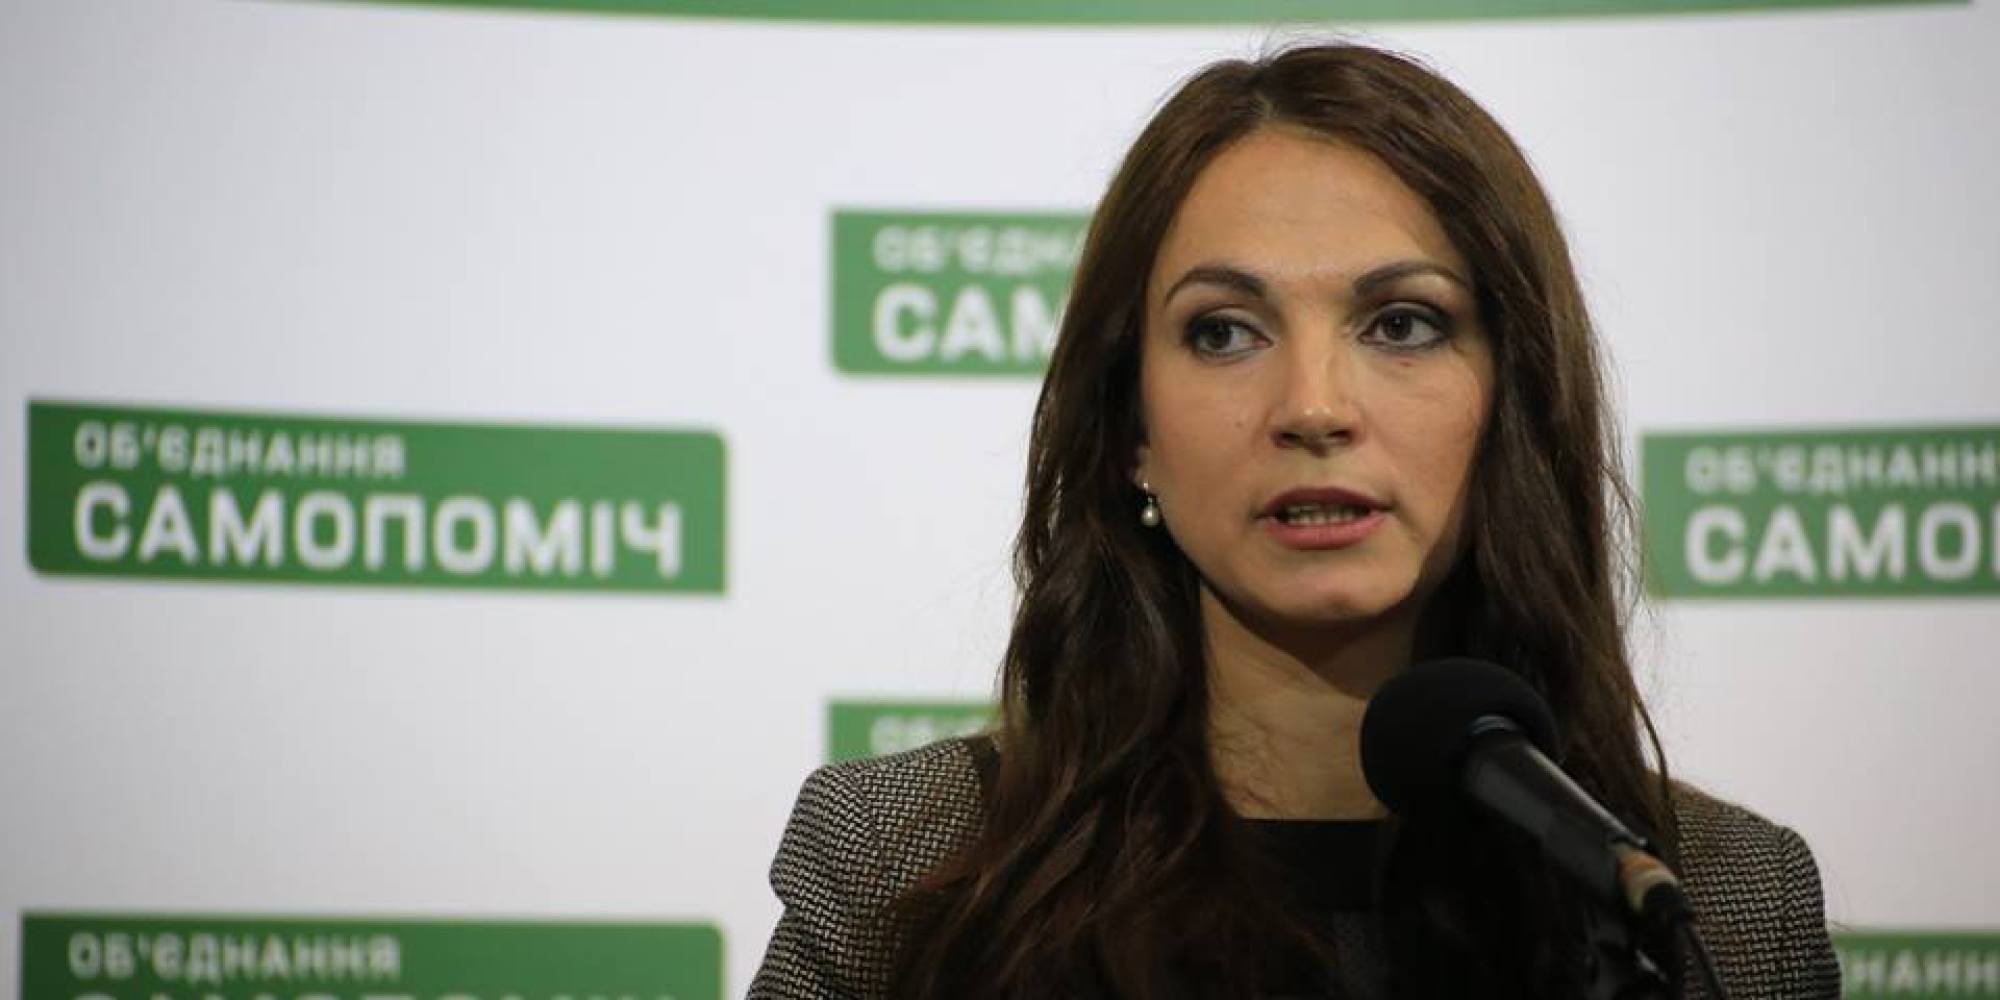 Ukrainian MP Hanna Hopko on the controversial decentralization vote